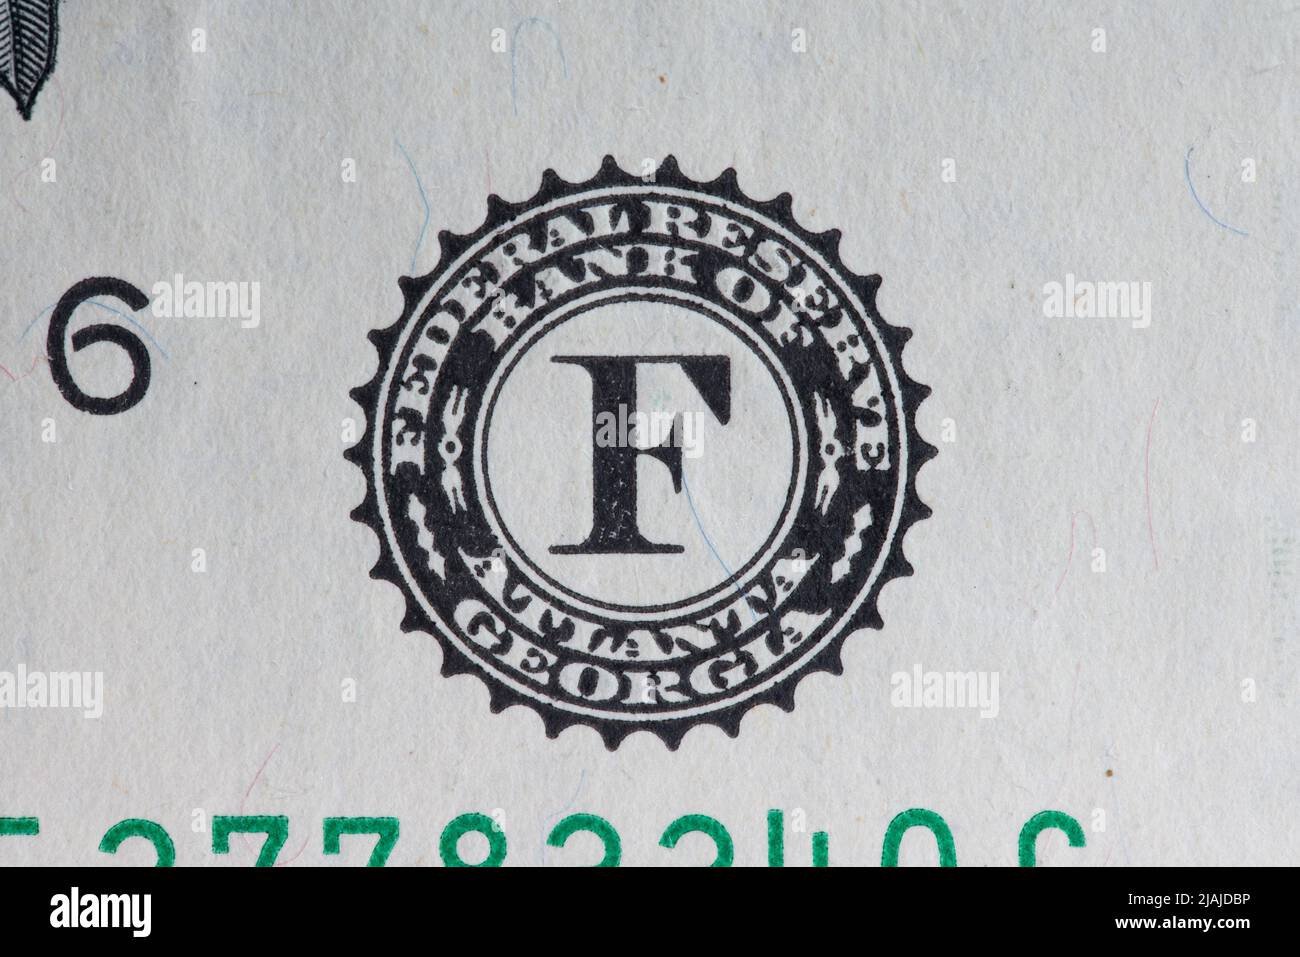 Federal reserve bank of Atlanta, Georgia. Seal on one dollar banknote Stock Photo